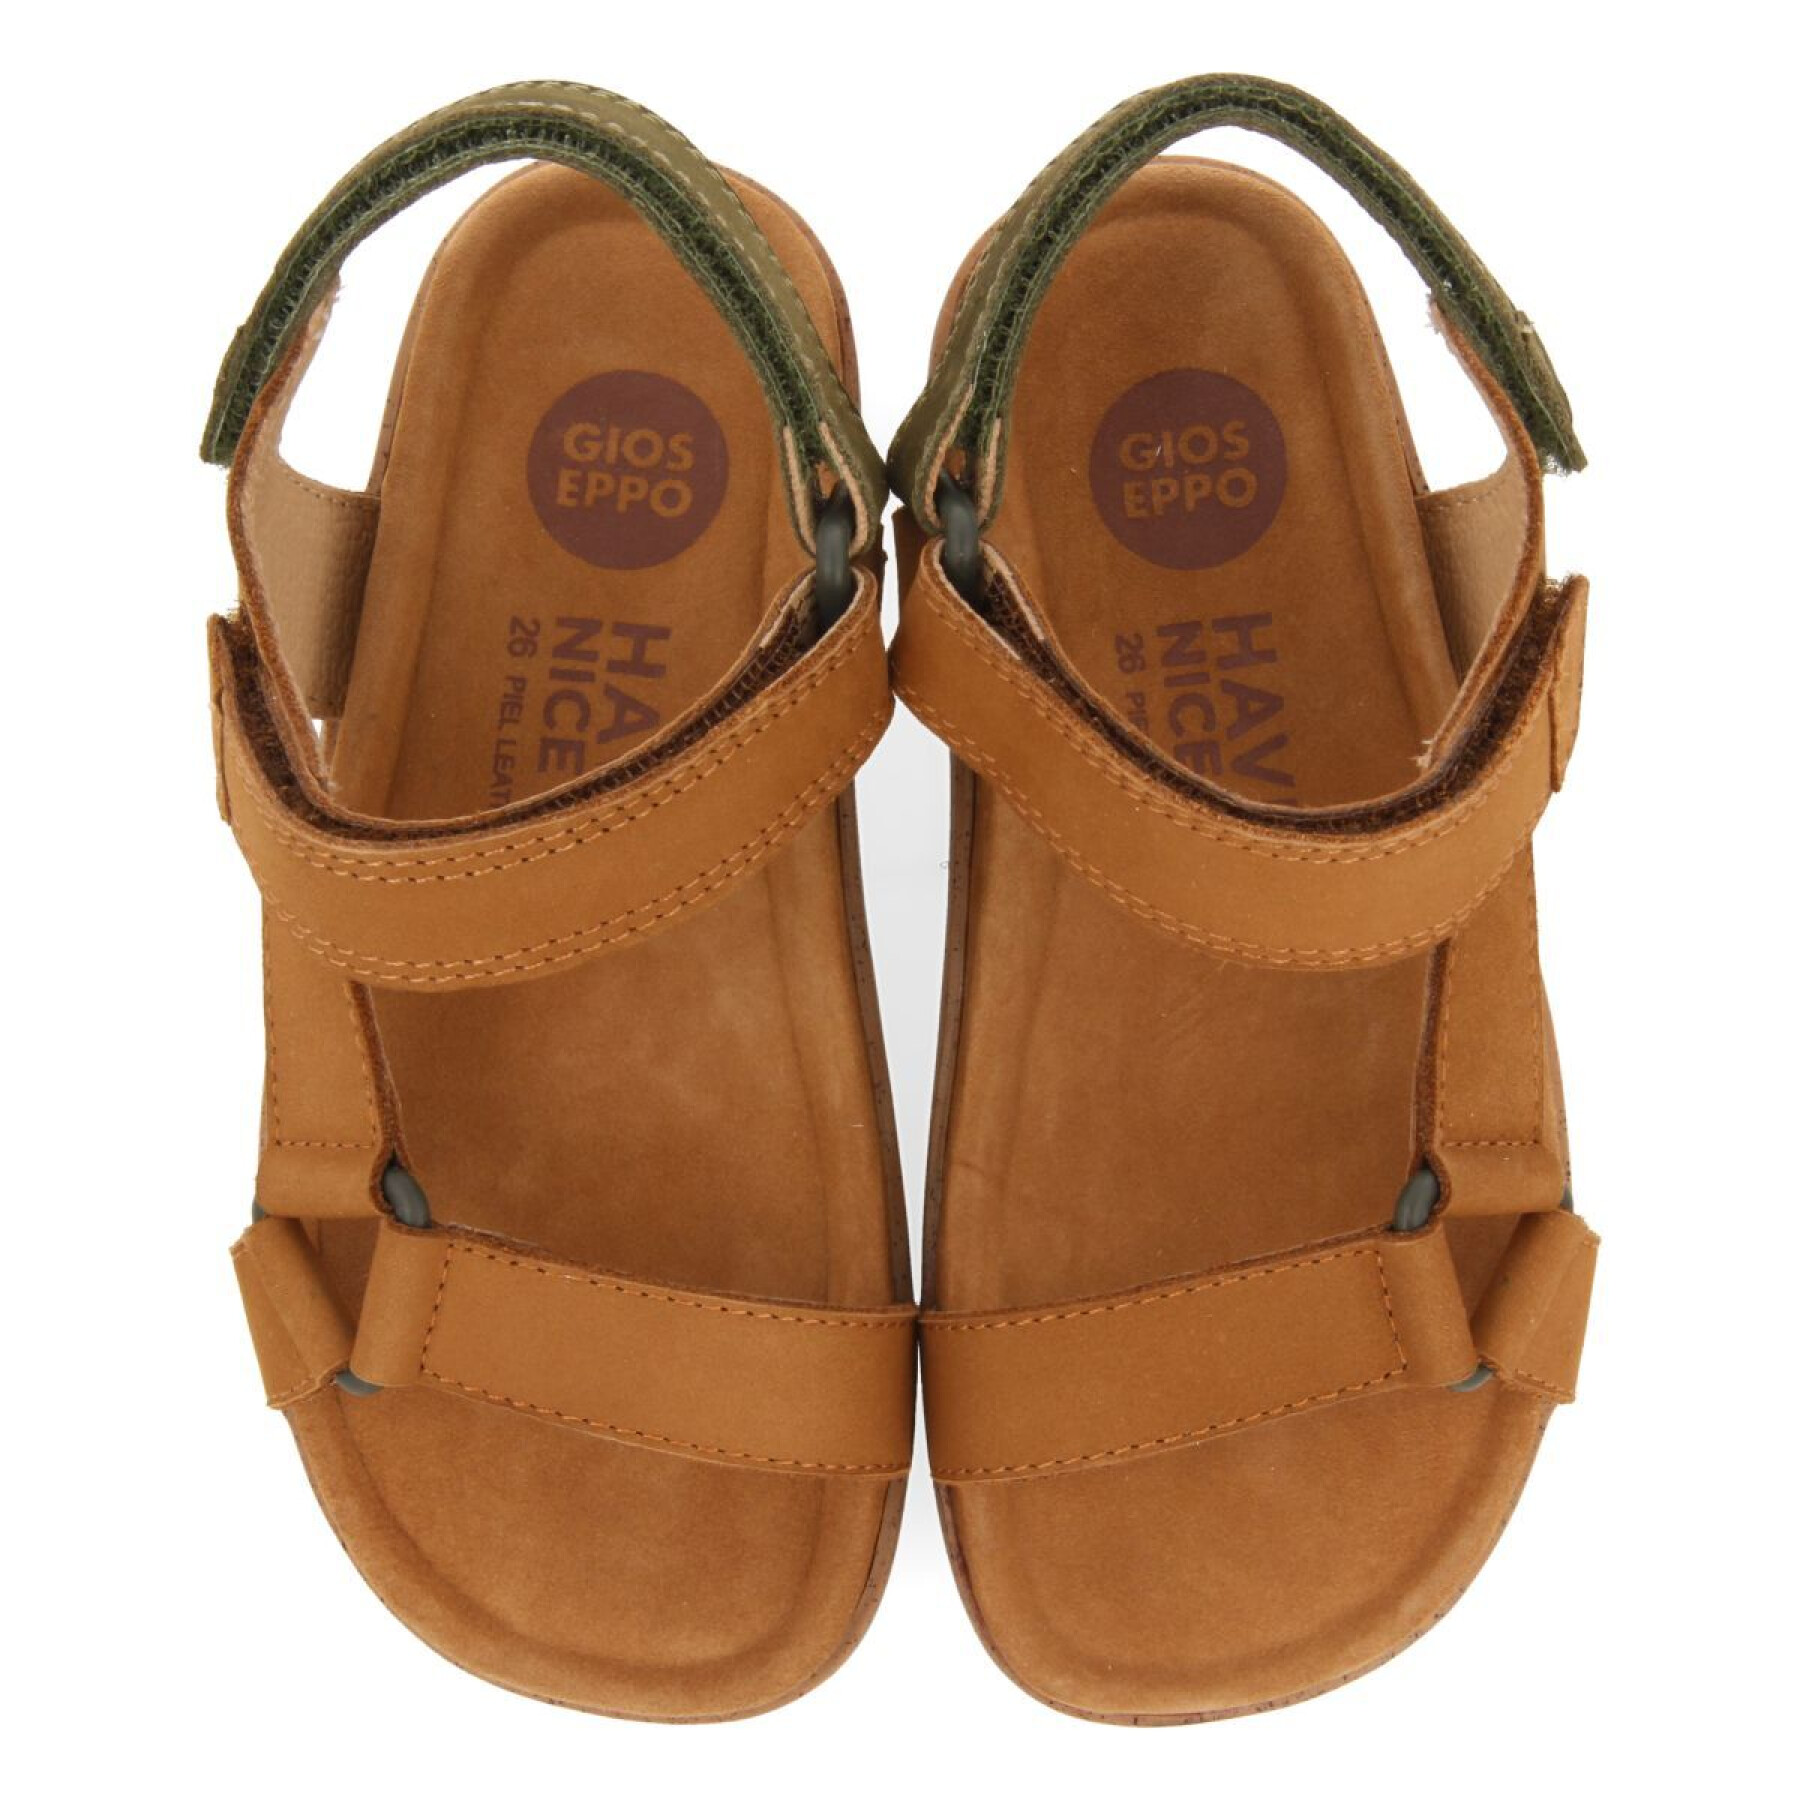 Children's sandals Gioseppo Depoe